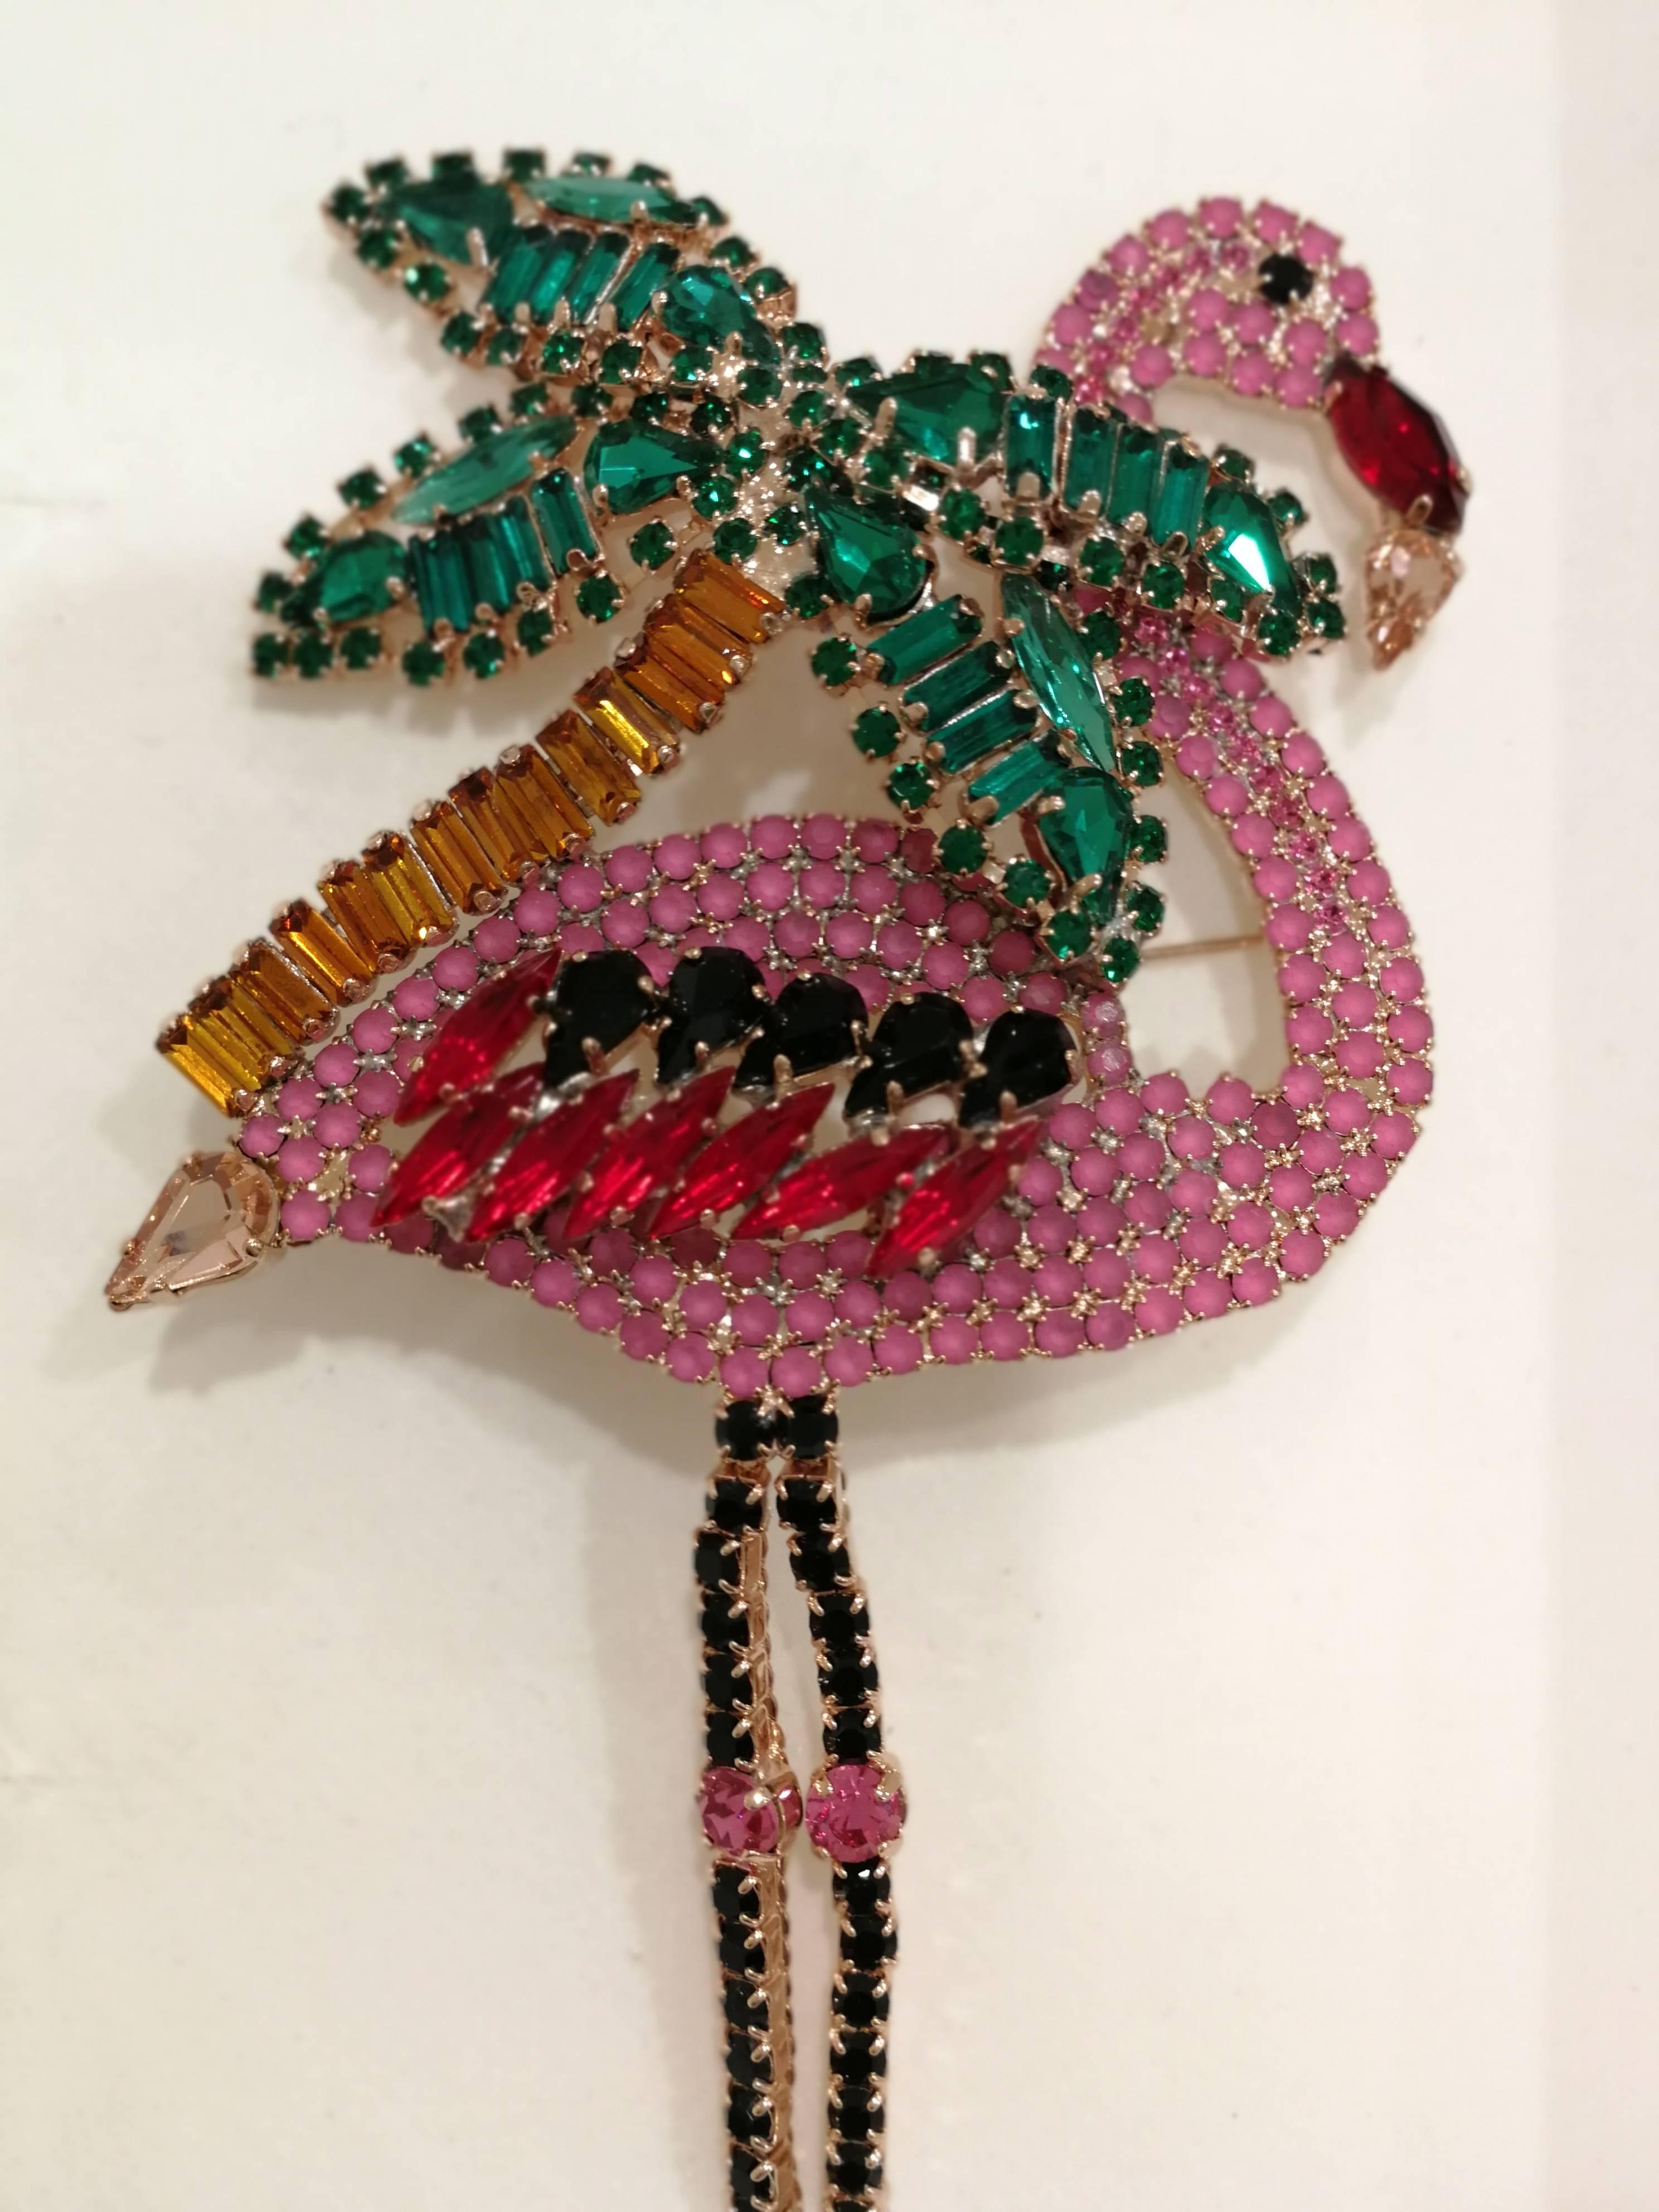 Lisa C. Pink Flamingo Palm Brooch - Pin 5